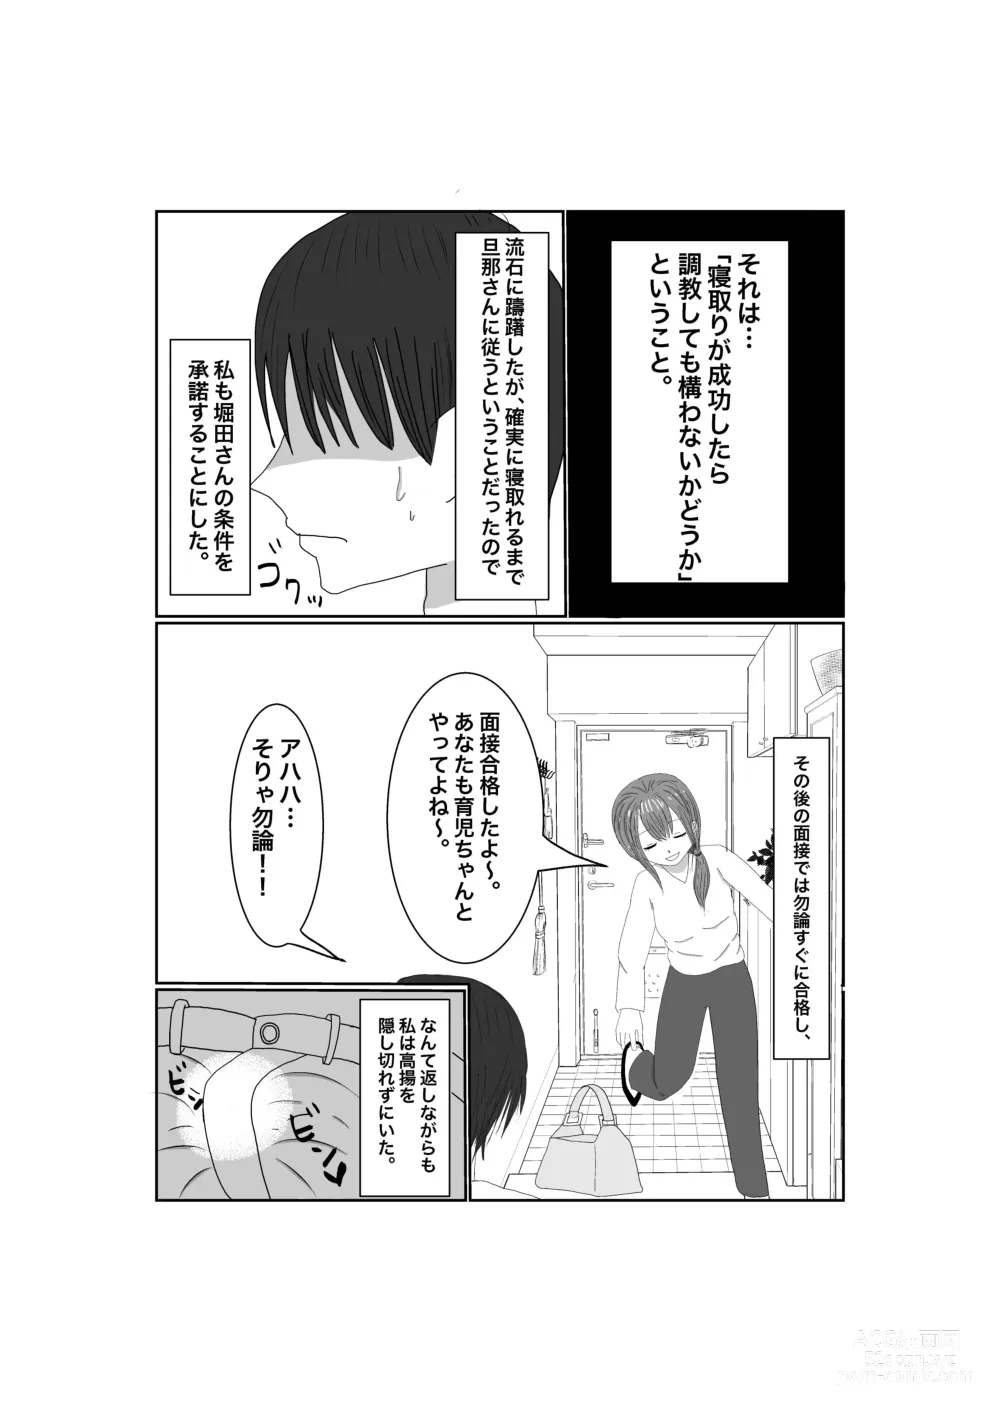 Page 7 of doujinshi Netorase...Ochite...Ochite...Soshite...